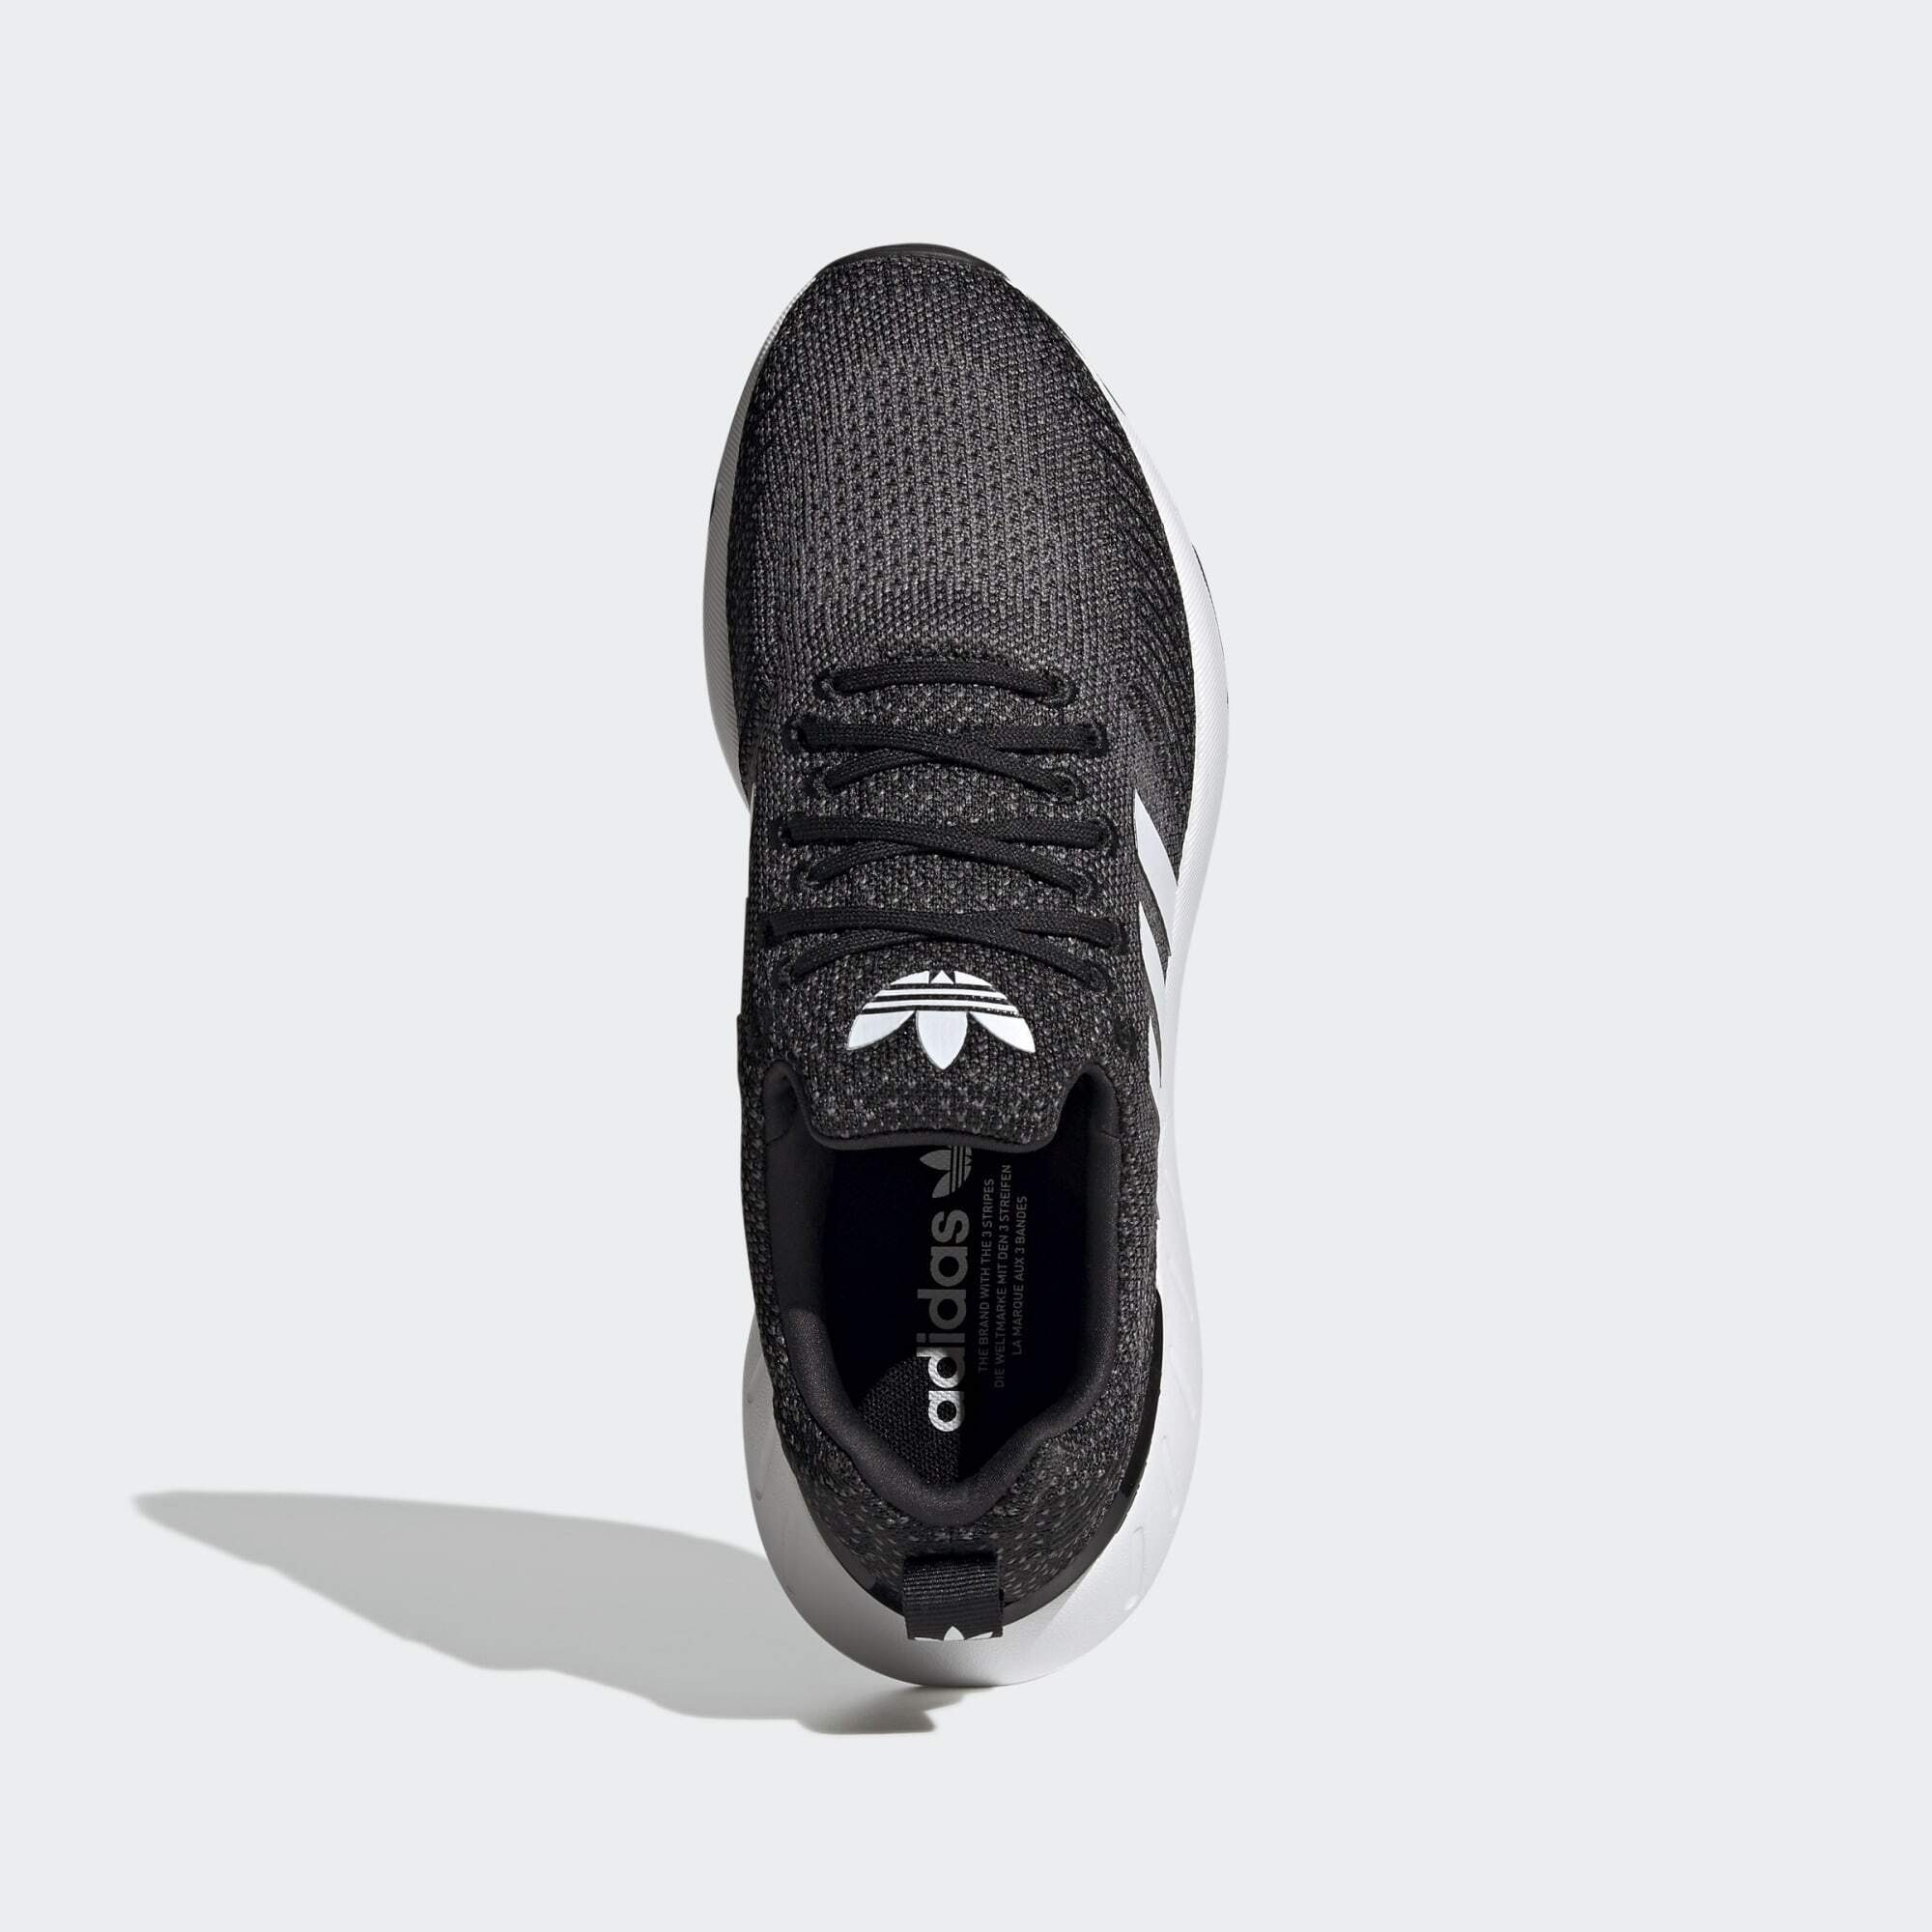 Five RUN / Cloud Core Sportswear / 22 Sneaker Grey White SWIFT Black SCHUH adidas